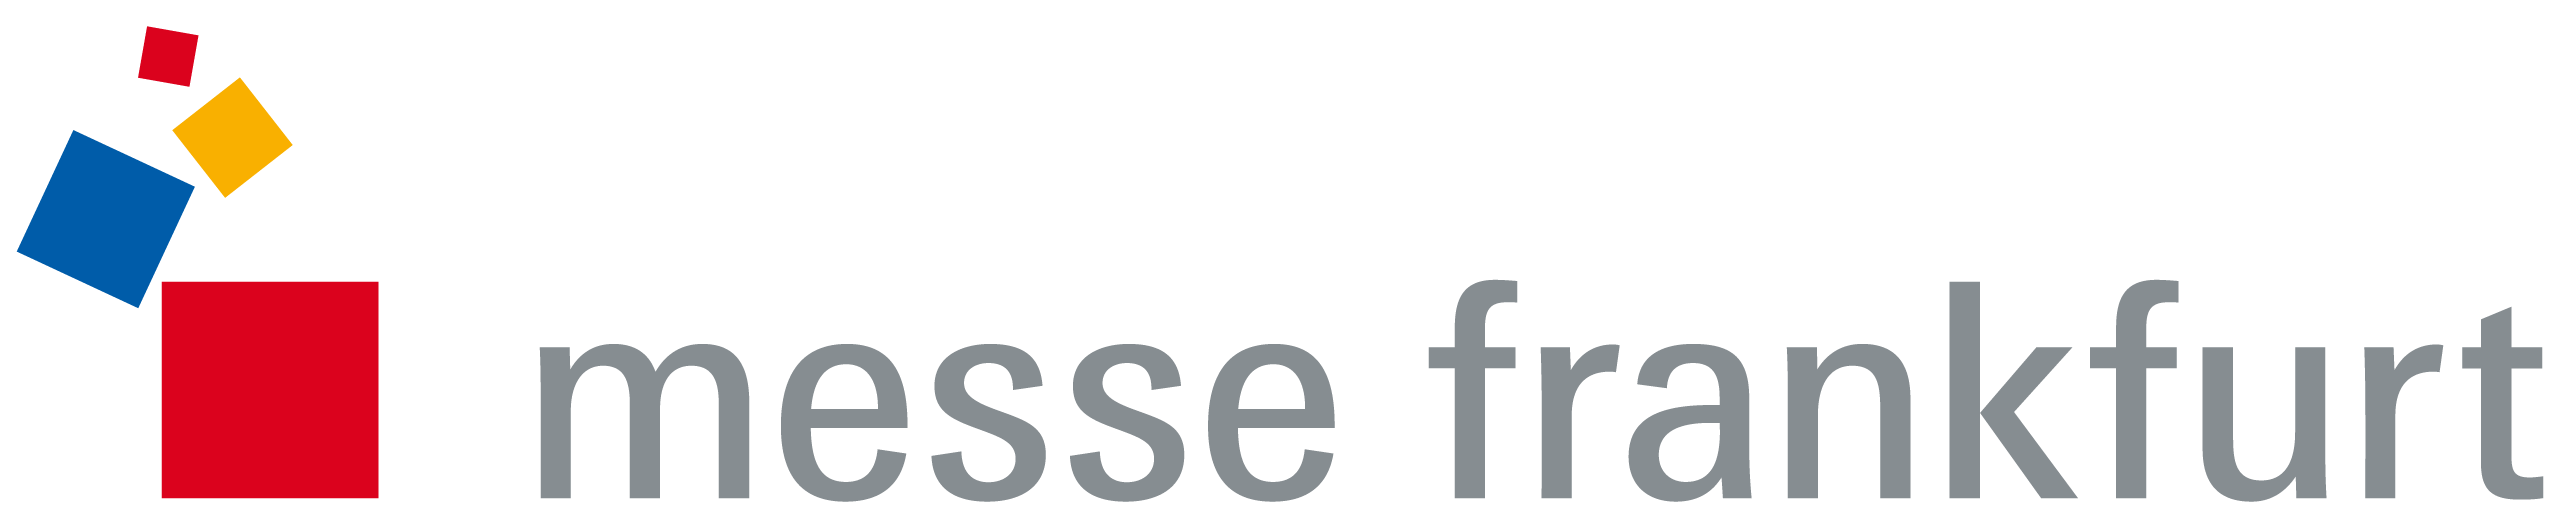 Messe-Frankfurt_logo